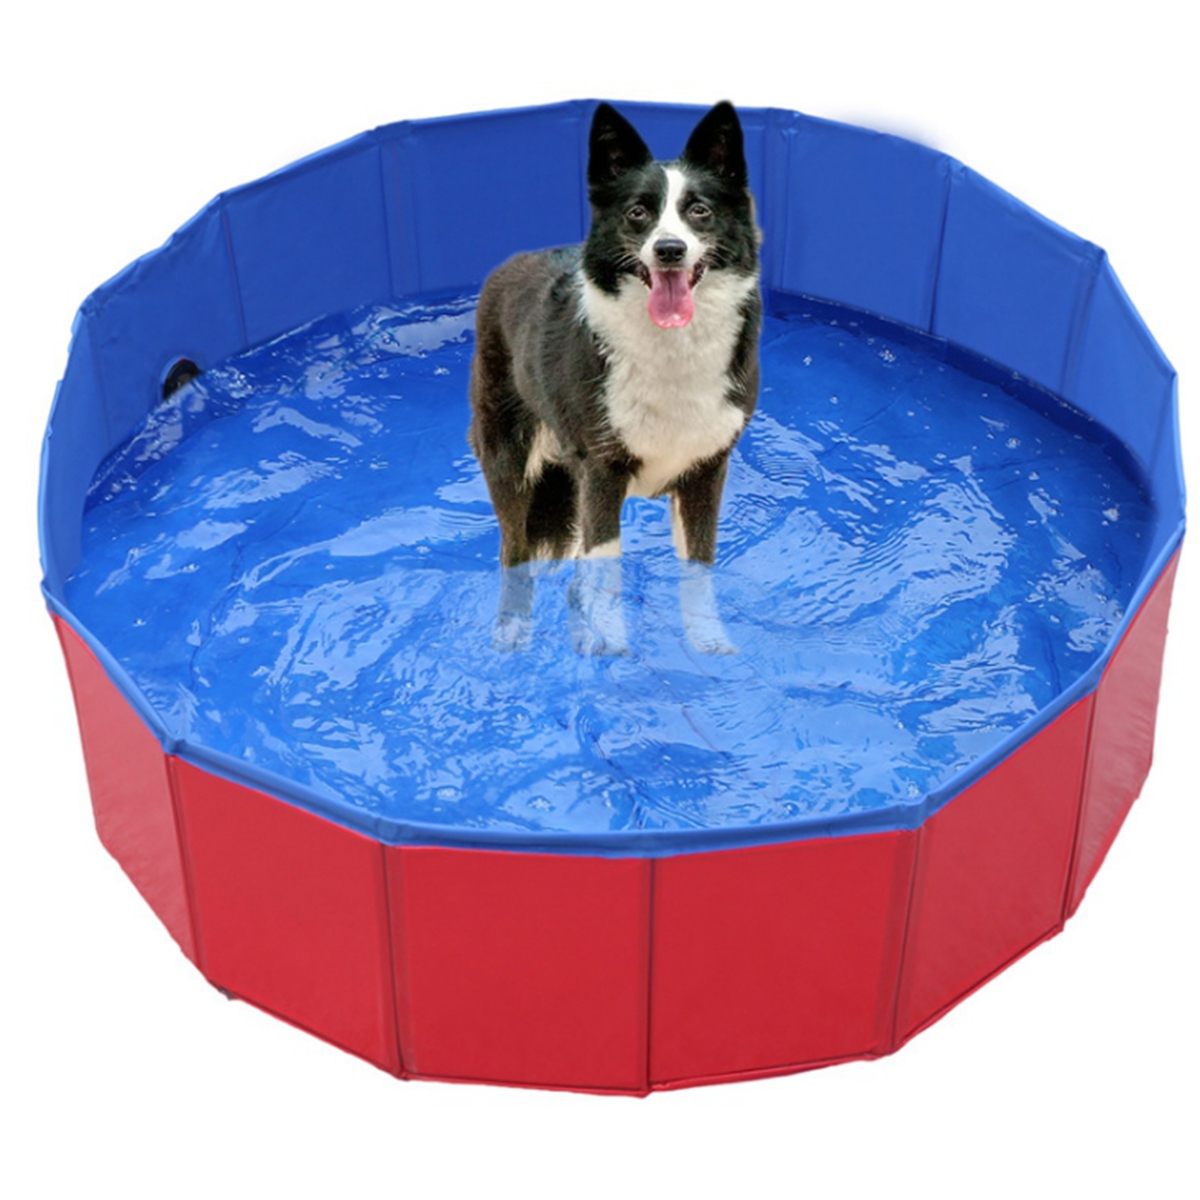 60100cm-Folding-Dog-Bath-Pool-Pet-Swimming-Bath-Tub-Kiddie-Pool-for-Dogs-Cats-Kids-1881131-3